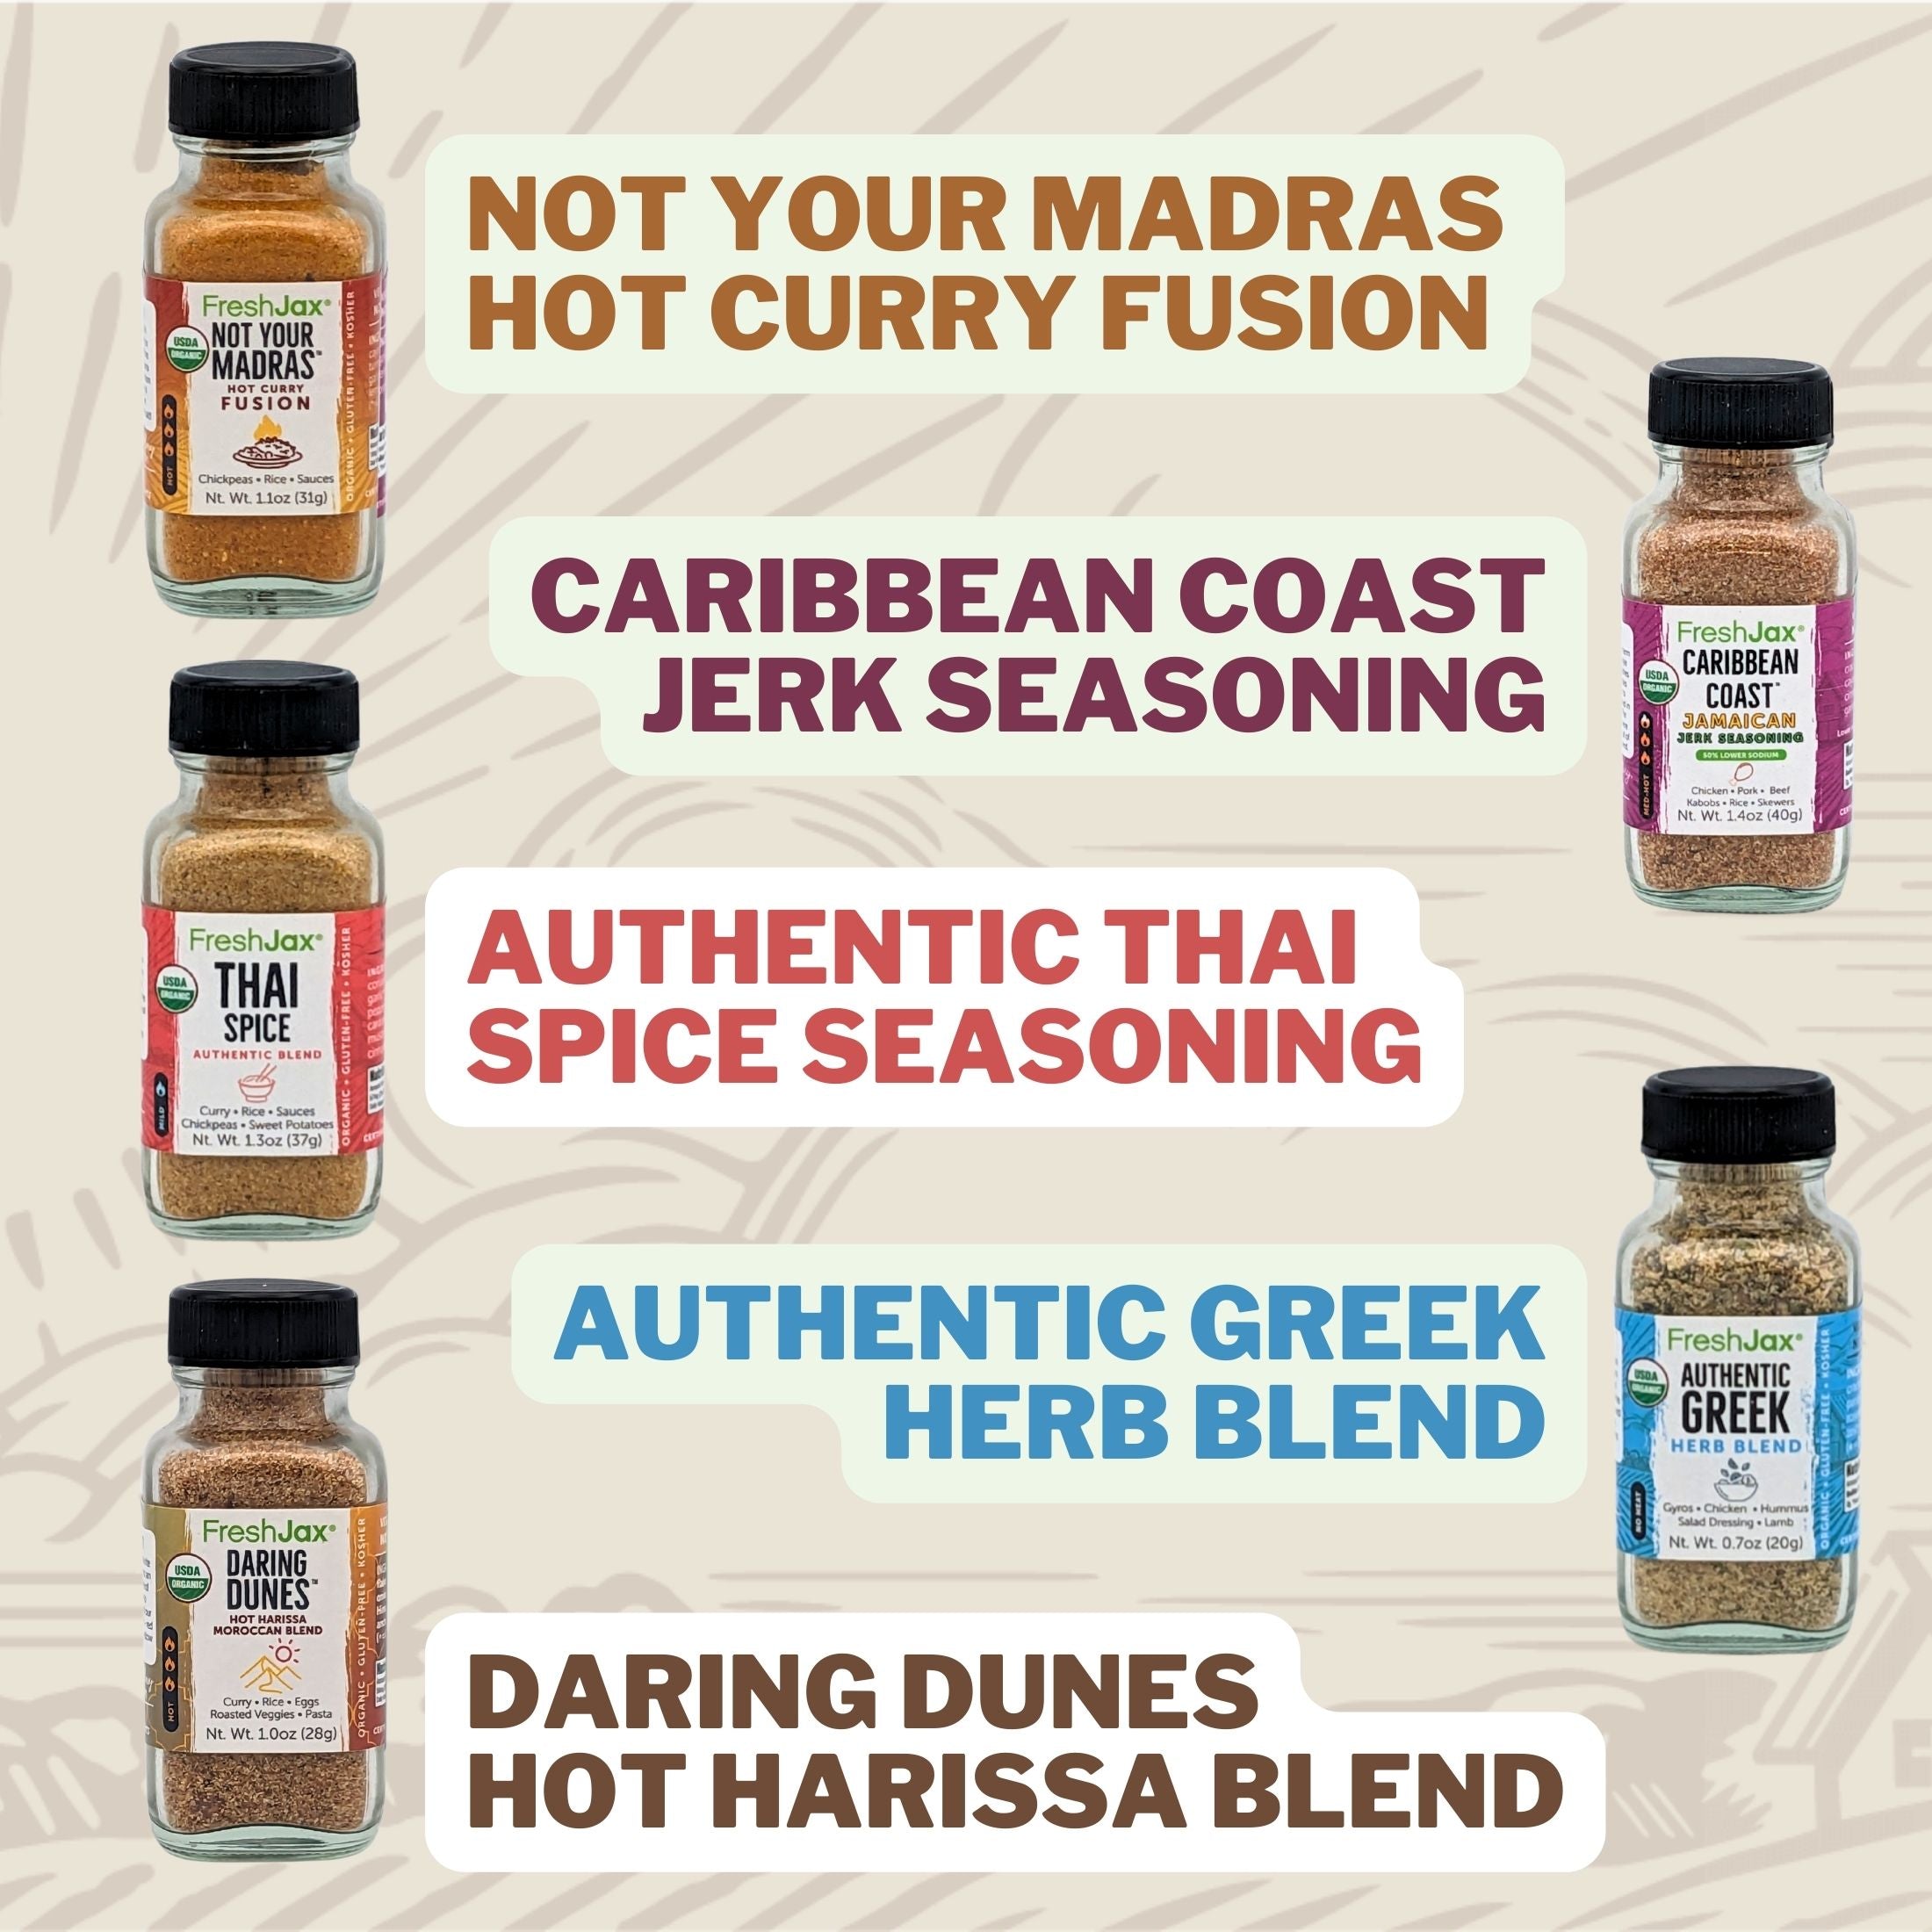 Not Your Madras Curry Fusion, Caribbean Coast Jerk, Thai Spice, Greek Seasoning, Daring Dunes Harissa